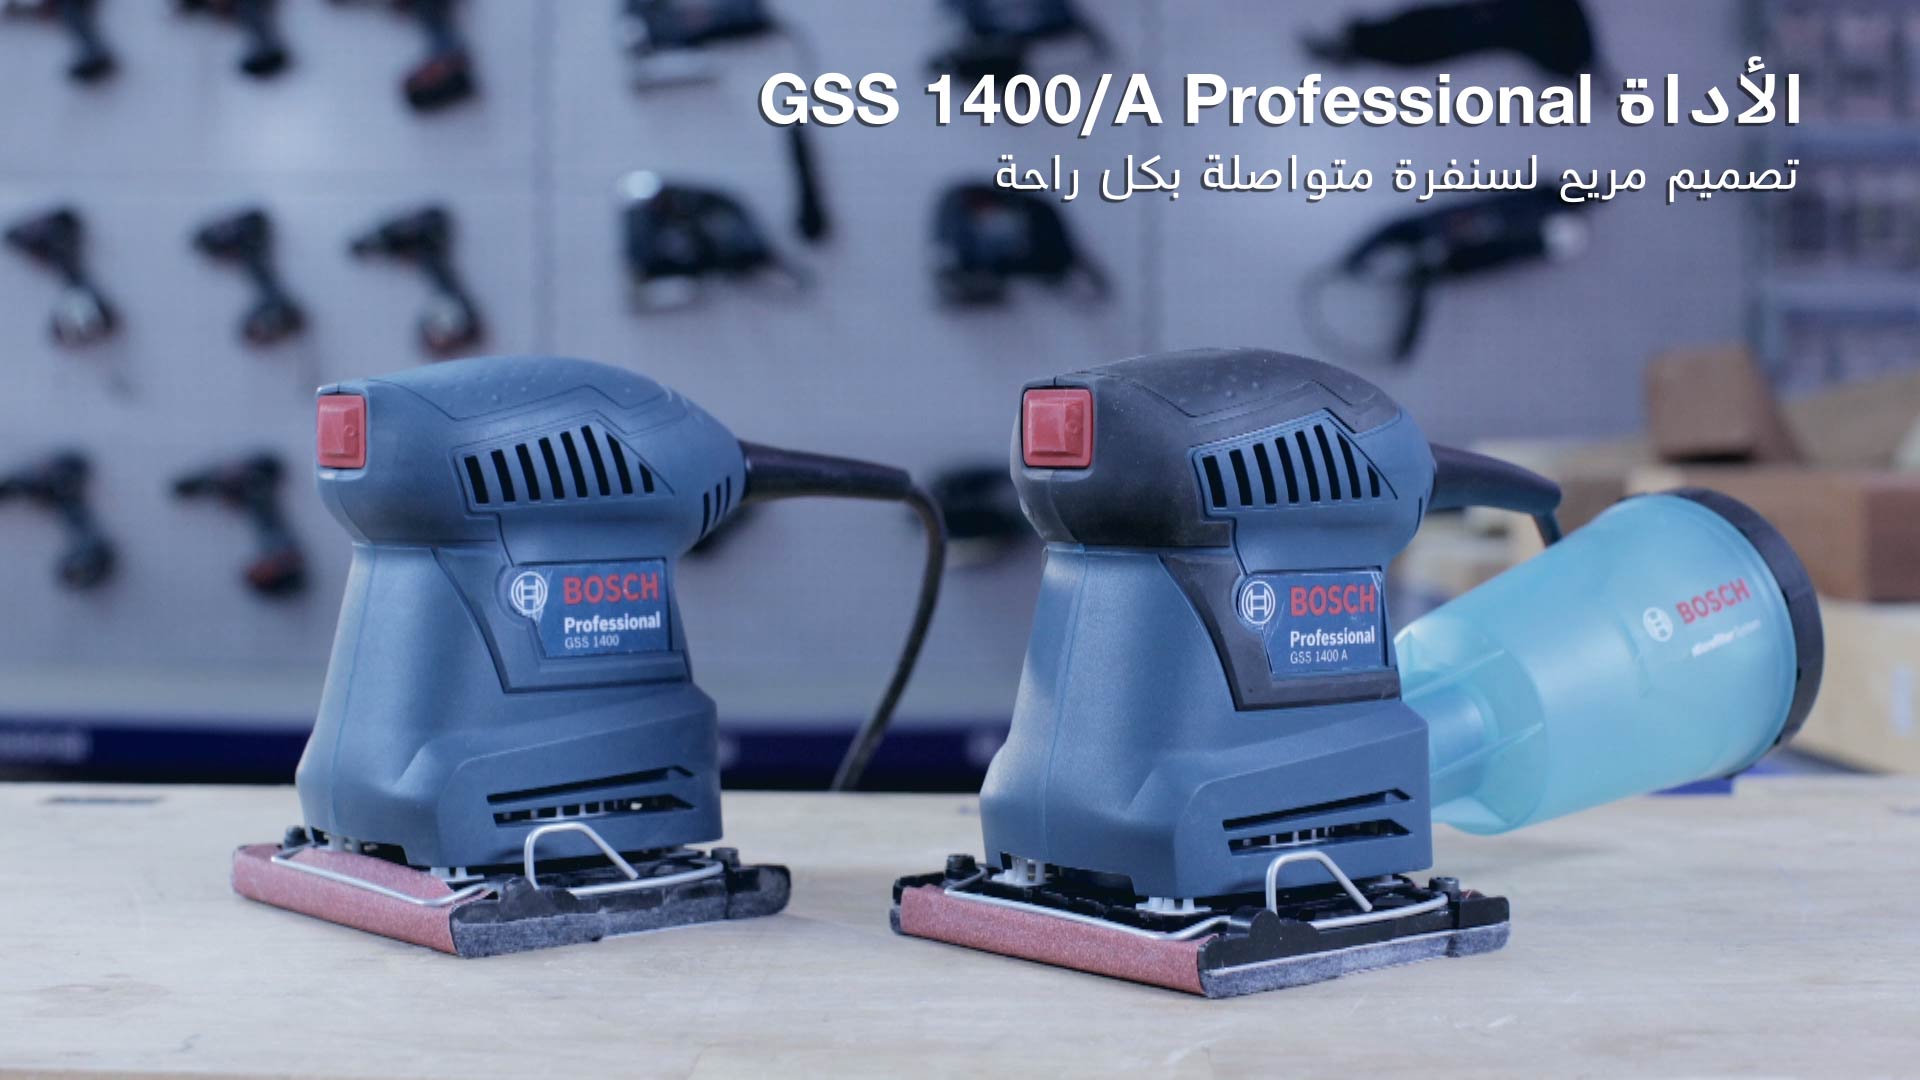 GSS 1400